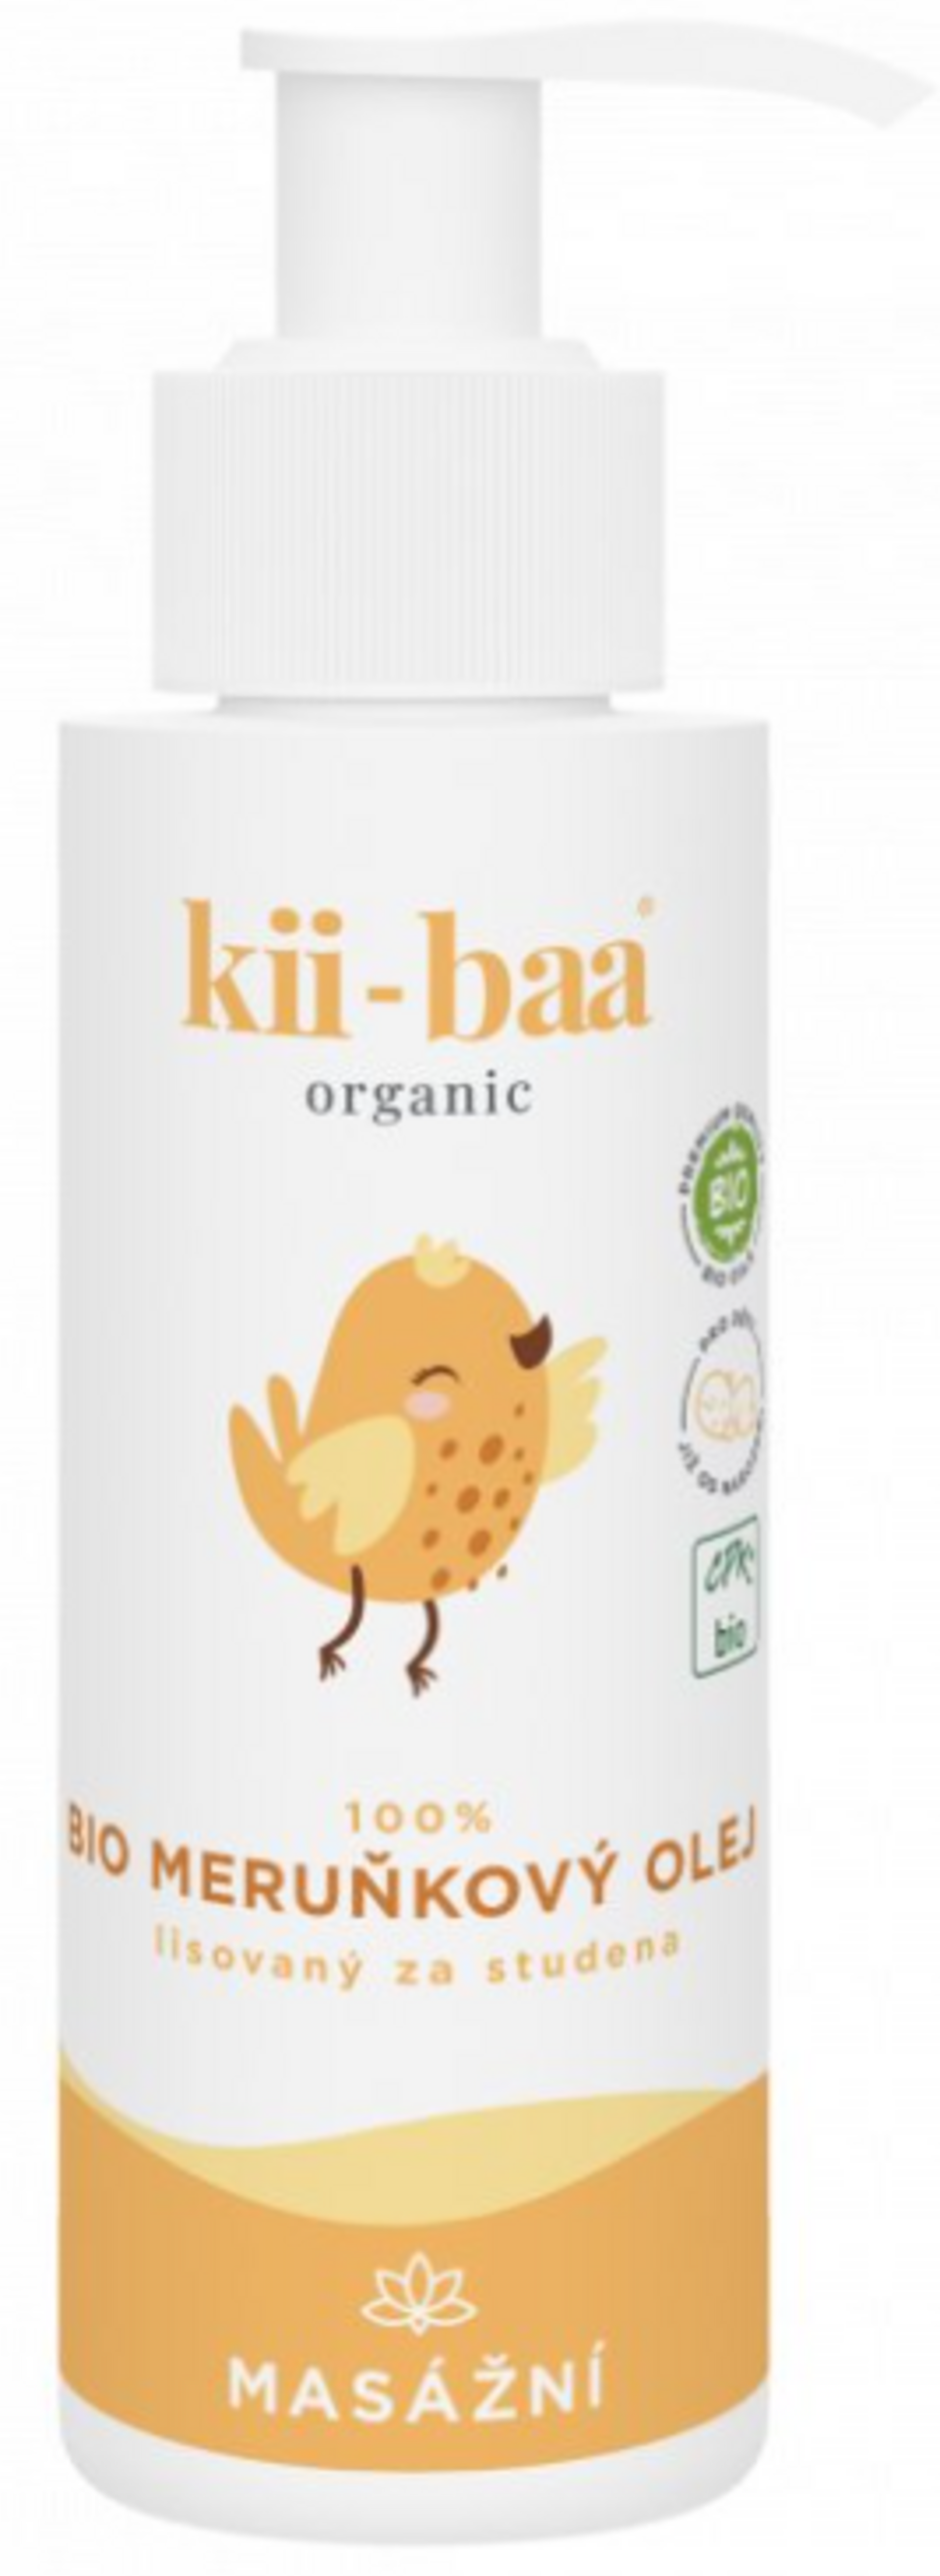 E-shop Kii-baa organic 100% Marhuľový olej 0+ masážny BIO 100 ml